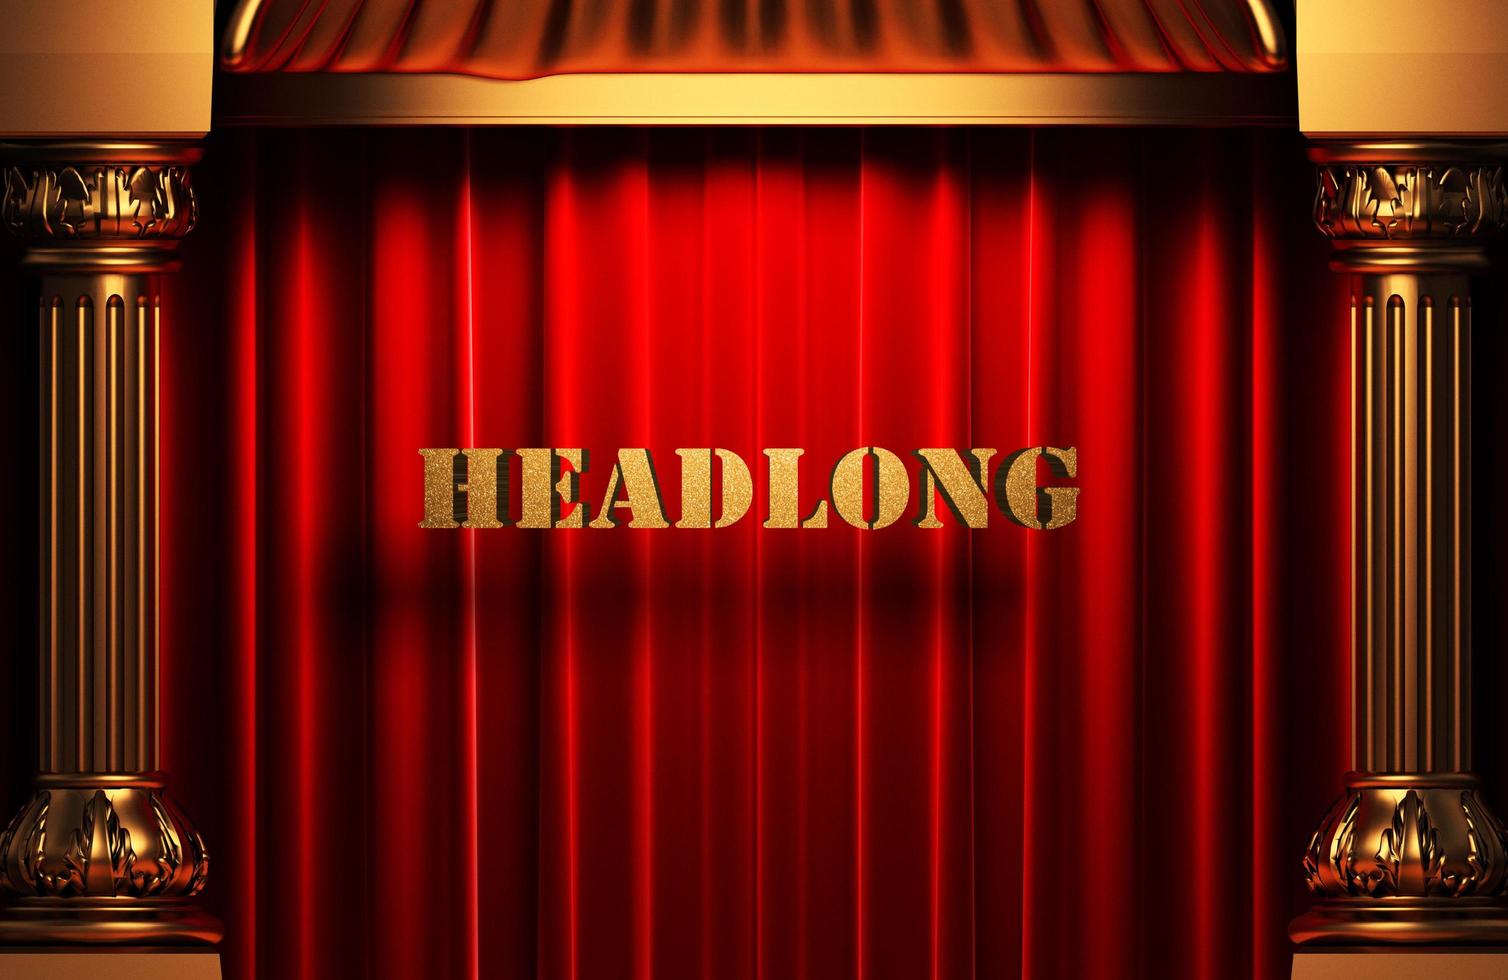 headlong golden word on red curtain photo